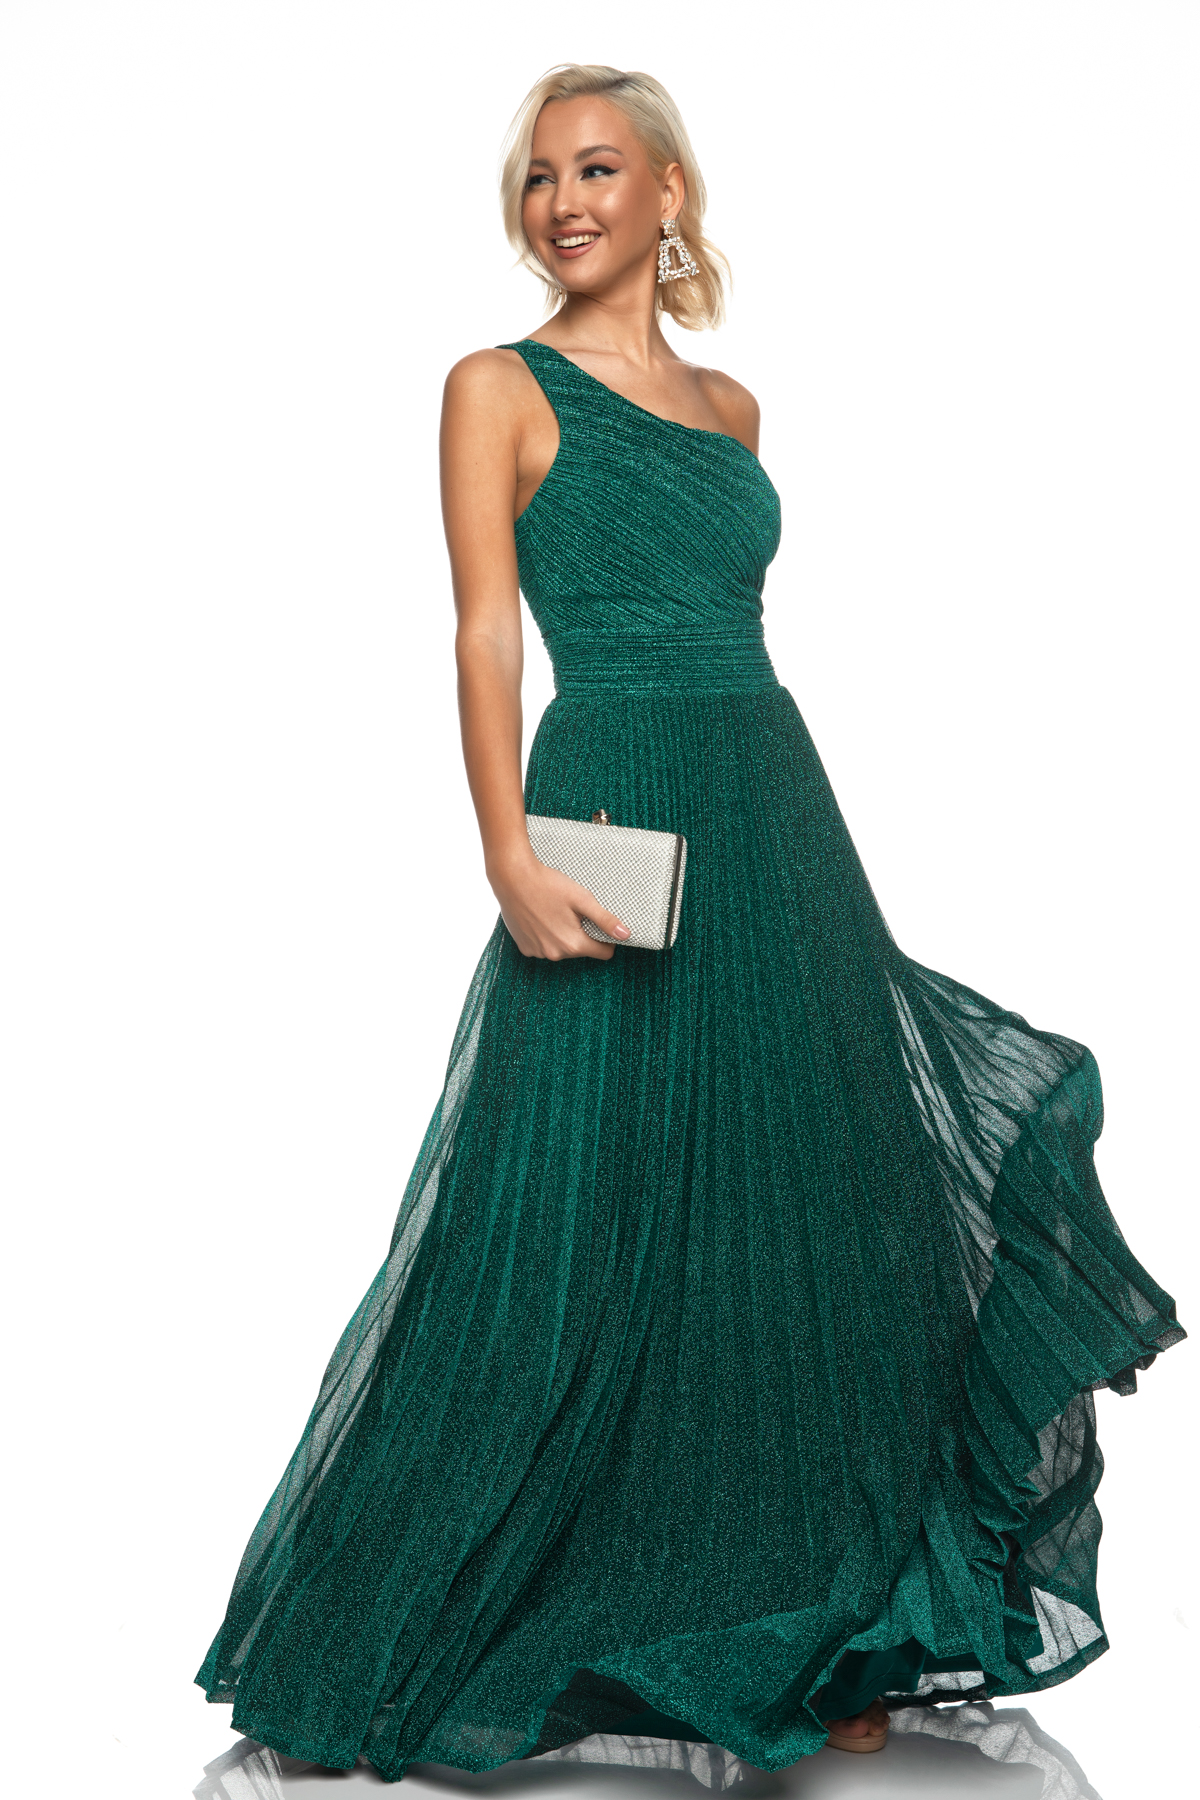 Sociable June fan Χάρη Αξιοσημείωτος Αναντικατάστατος φόρεμα σμαραγδι αχρησιμοποίητος  Ενυδρείο Telemacos